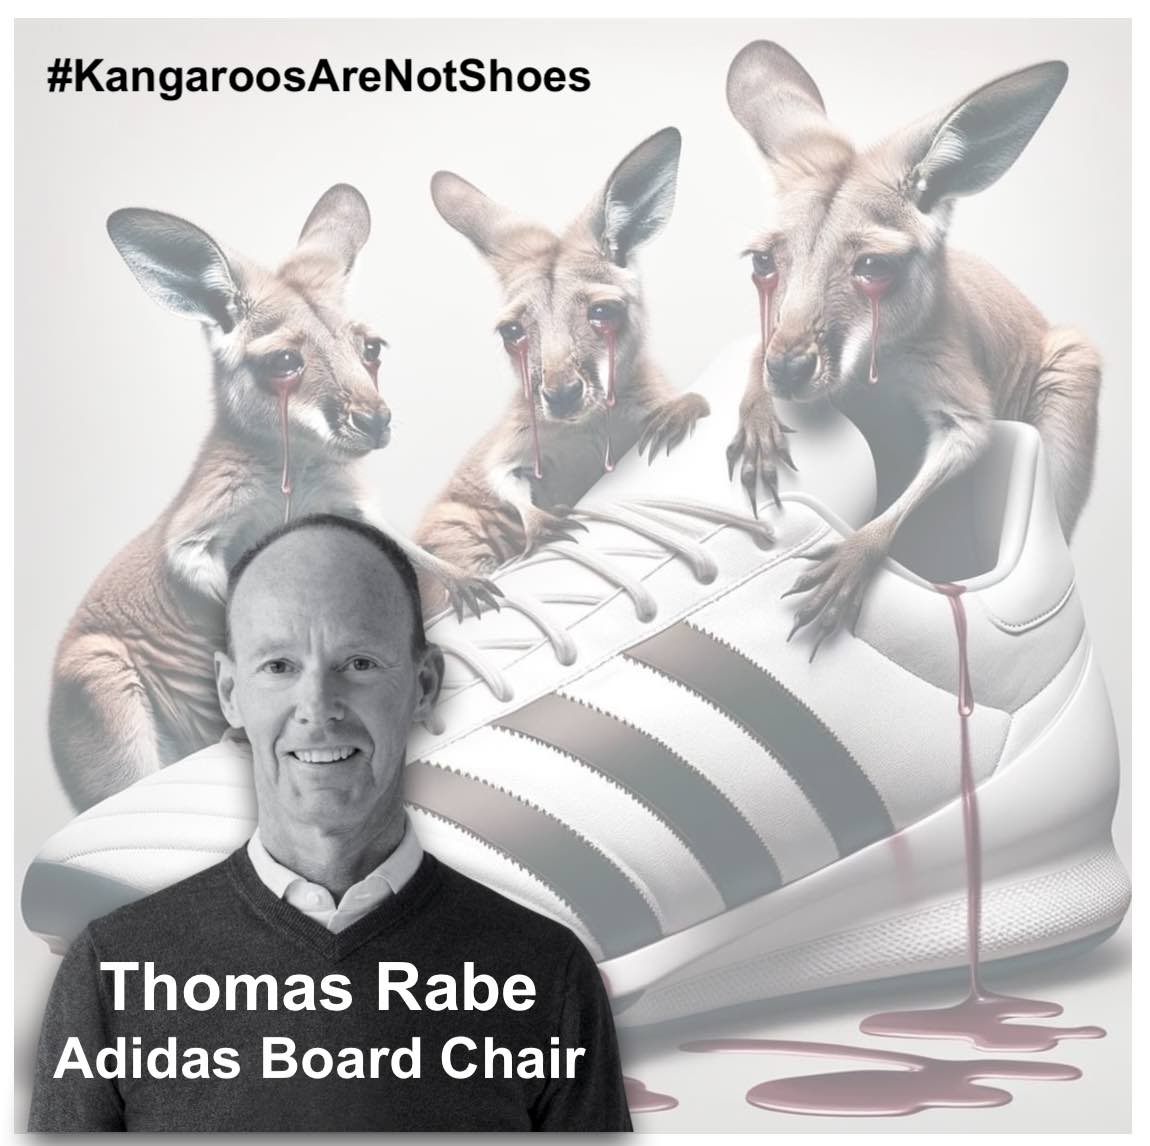 @theirturn @BertelsmannSt @adidas @KSchlautmann @RTLDE_Corporate @animaljusticeAU @AJP_Victoria @AJPNSW @ajp_sa @VicKangaroos @TheHumaneCenter @penguinrandom Perhaps the @BertelsmannFdn and @BFNA_docs (which aim to make the world a better place) can convince #bertelsmann CEO Thomas Rabe to end the massacre of kangaroos for football cleats. 
cc: @GermanyinUSA @GermanAmbUSA @punktpreradovic @A_Leimbach @PeterBorbe #KangaroosAreNotShoes